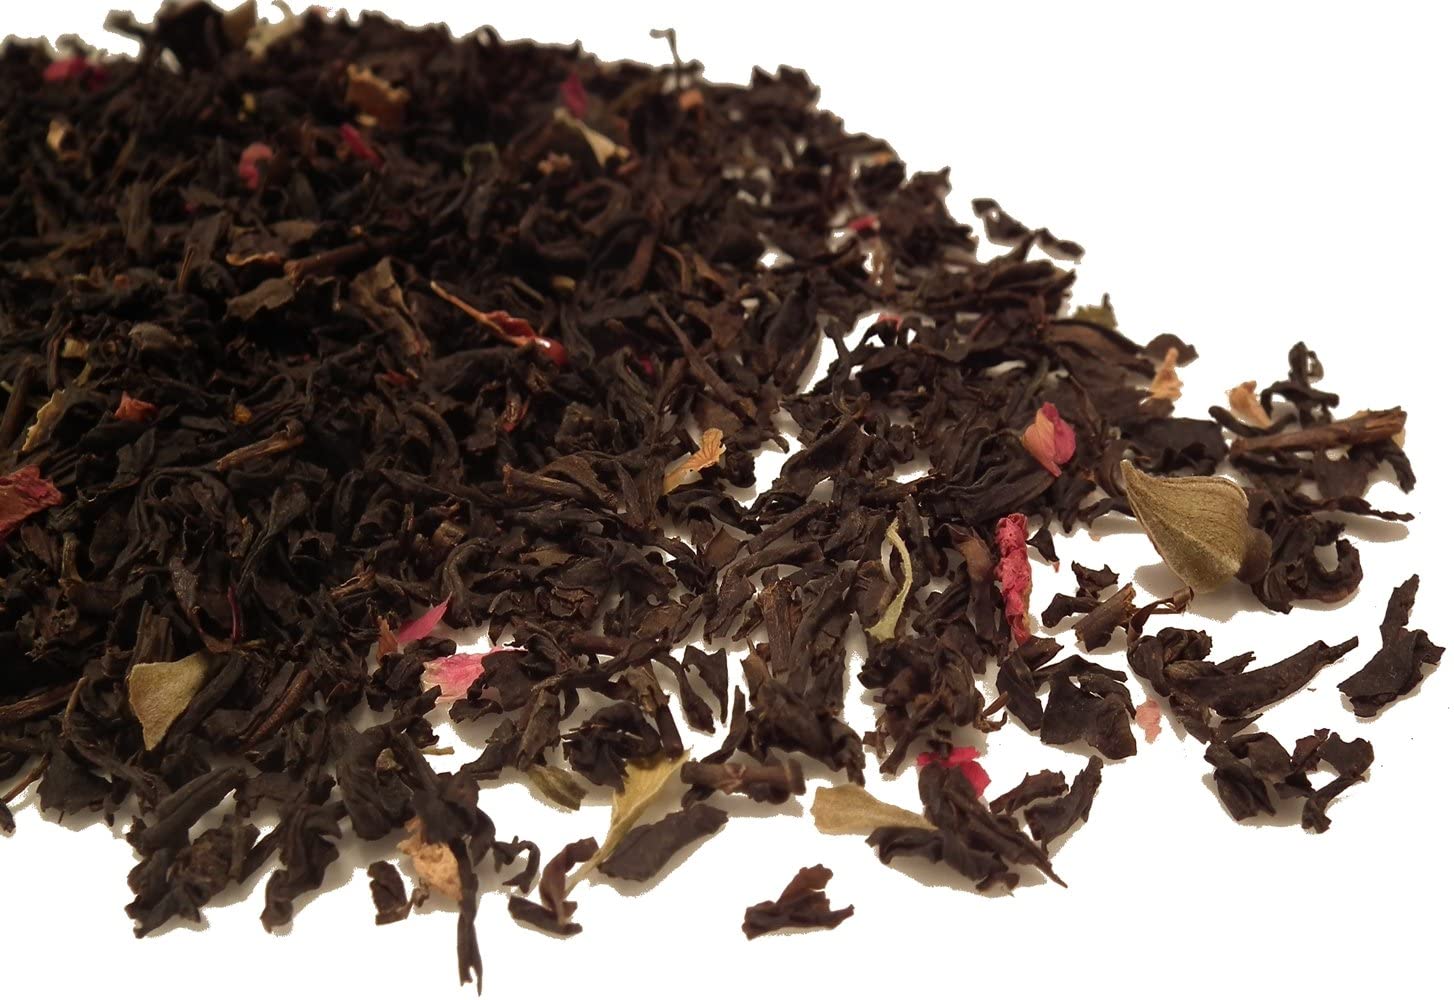 Rose Tea Congou Emperor 100g Black Flavoured Loose Leaf Tea by TeaCakes of Yorkshire.